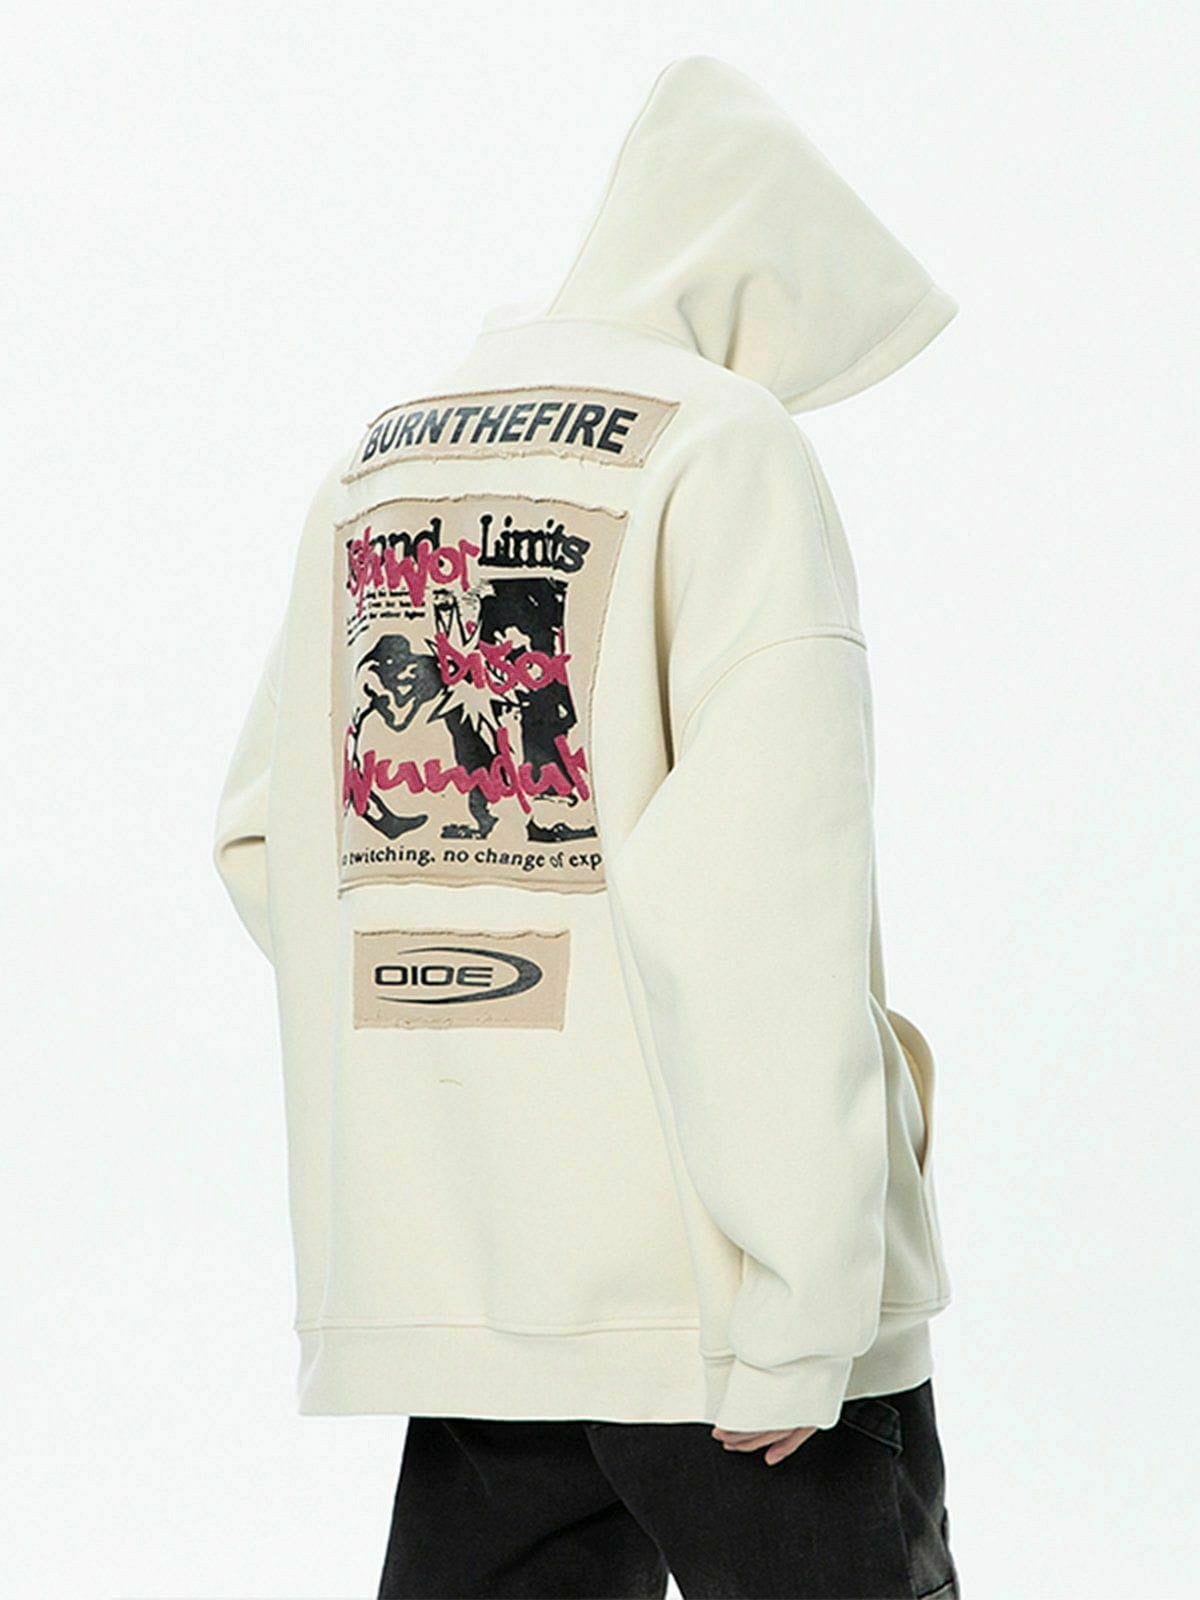 burn the fire hoodie edgy & retro streetwear 1361